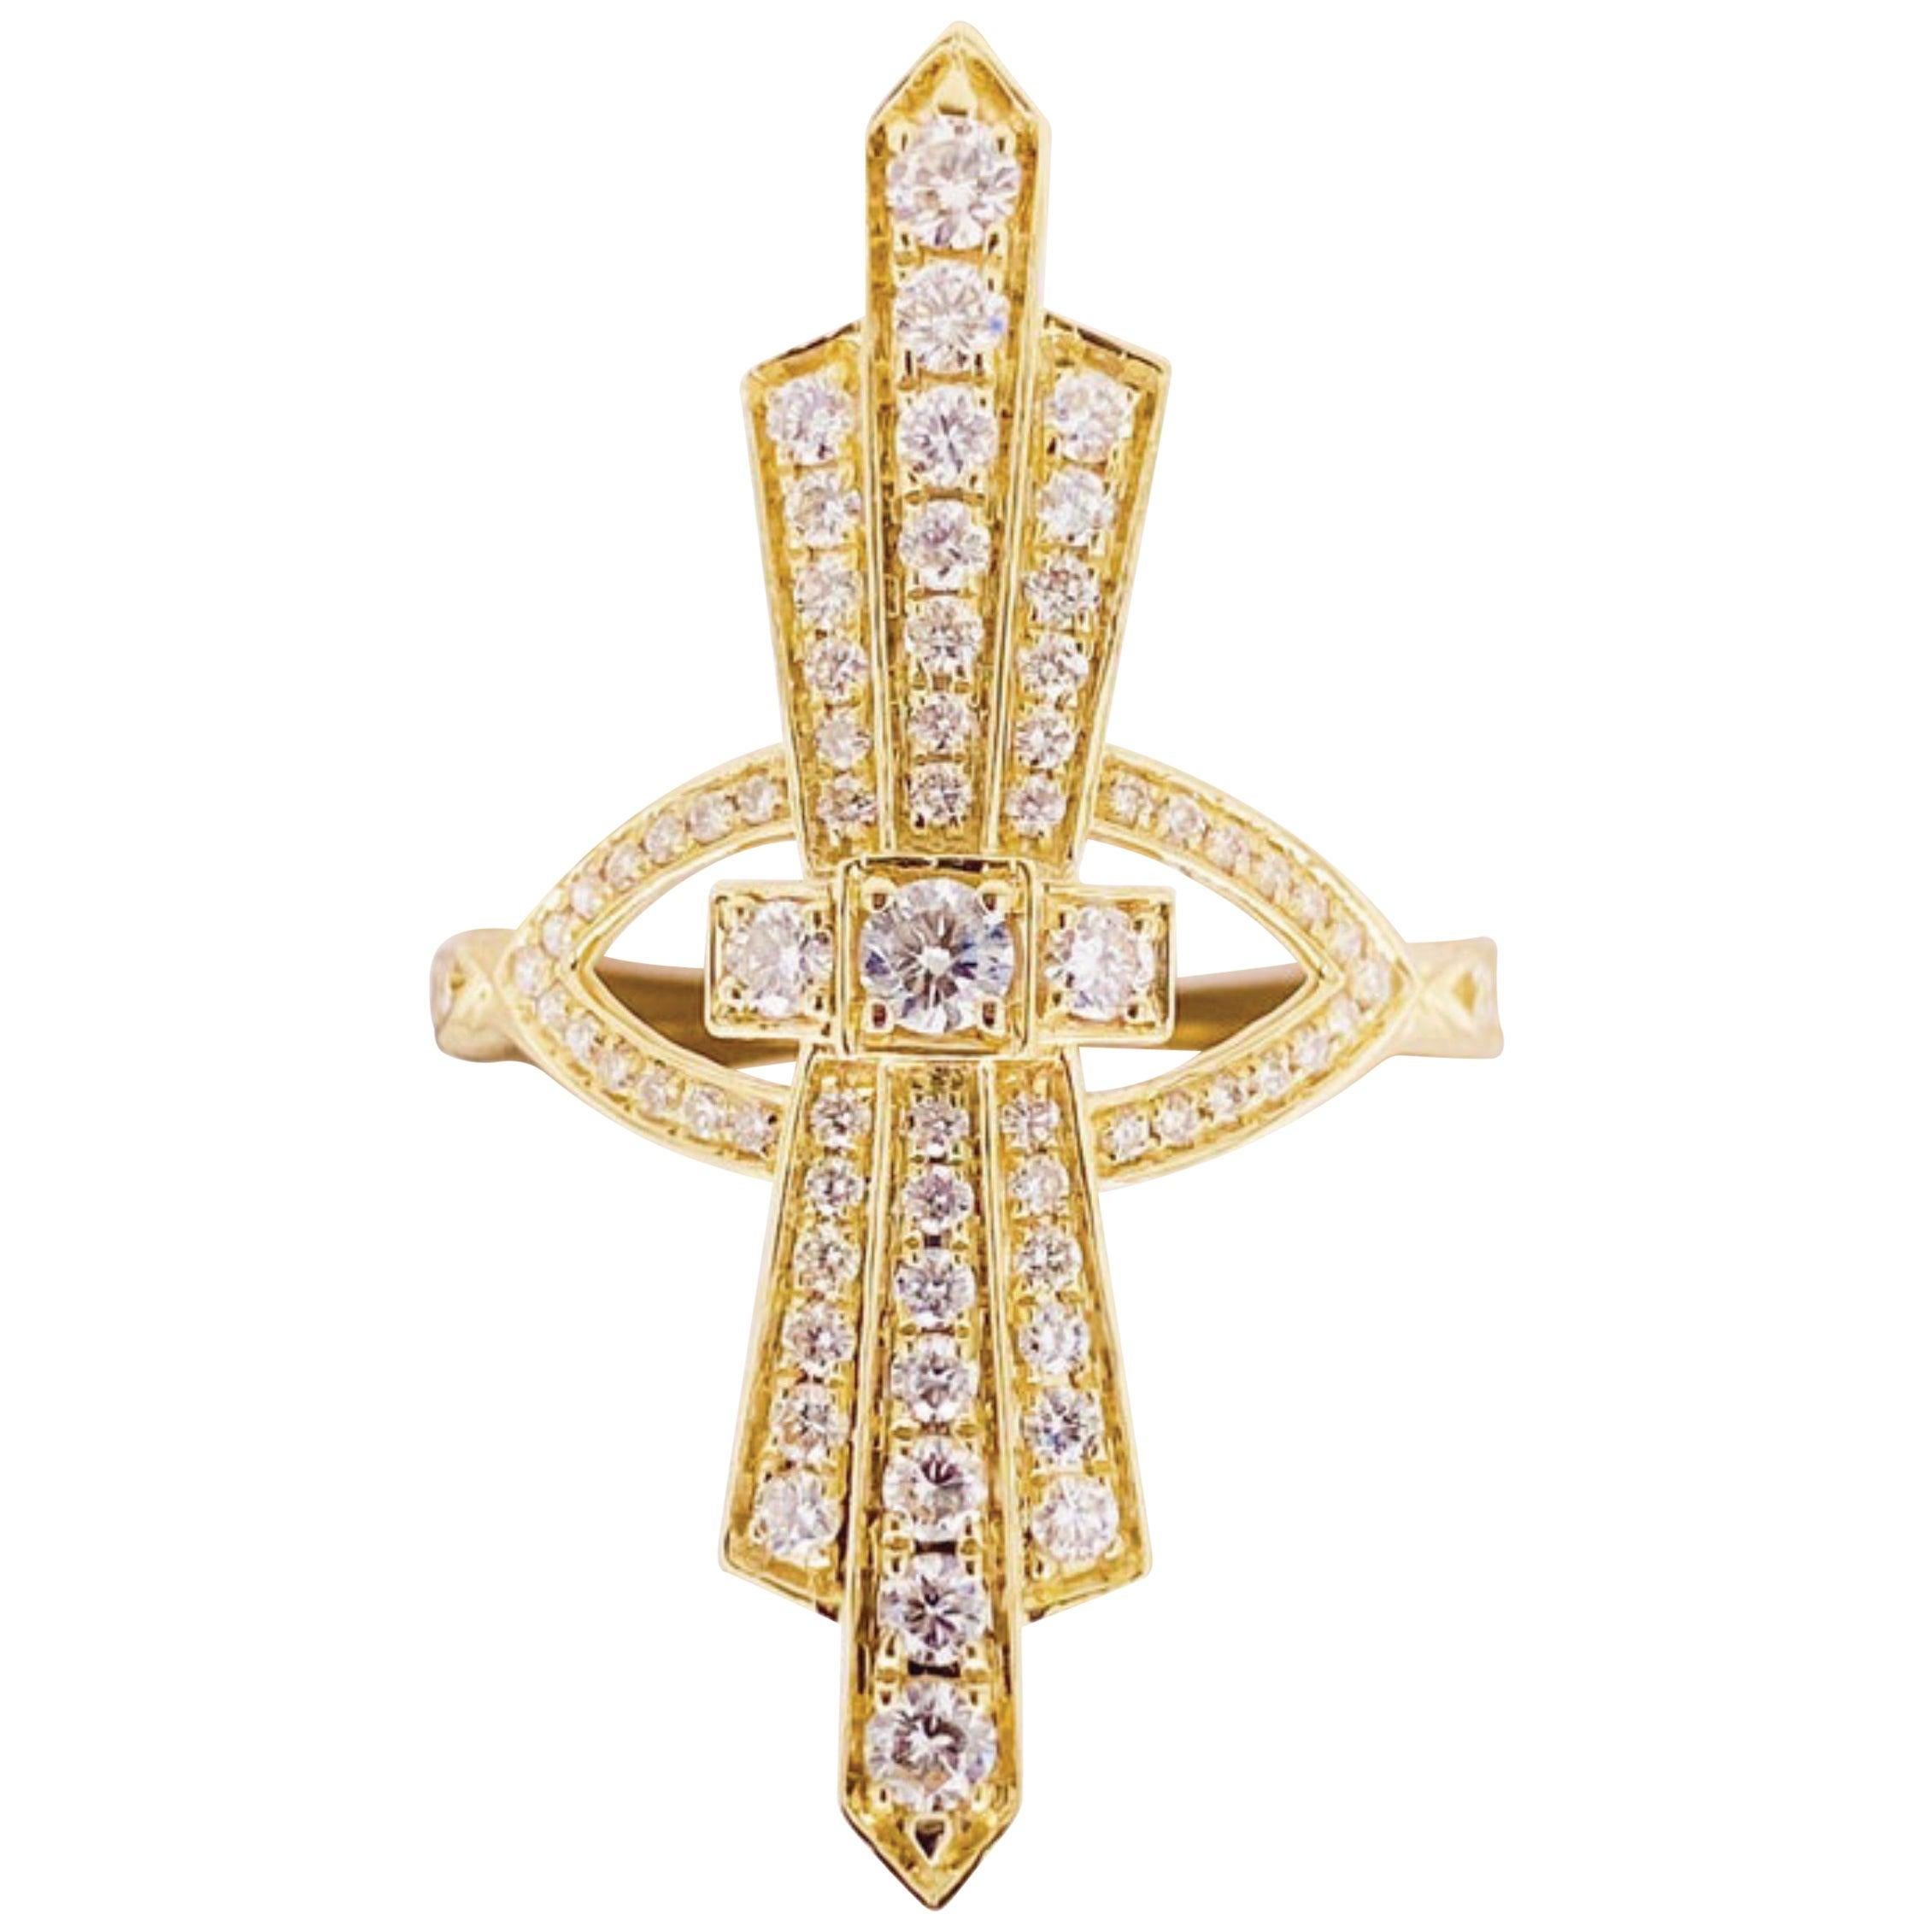 Art Deco Style Ring, 14k Yellow Gold Diamond Designer Ring